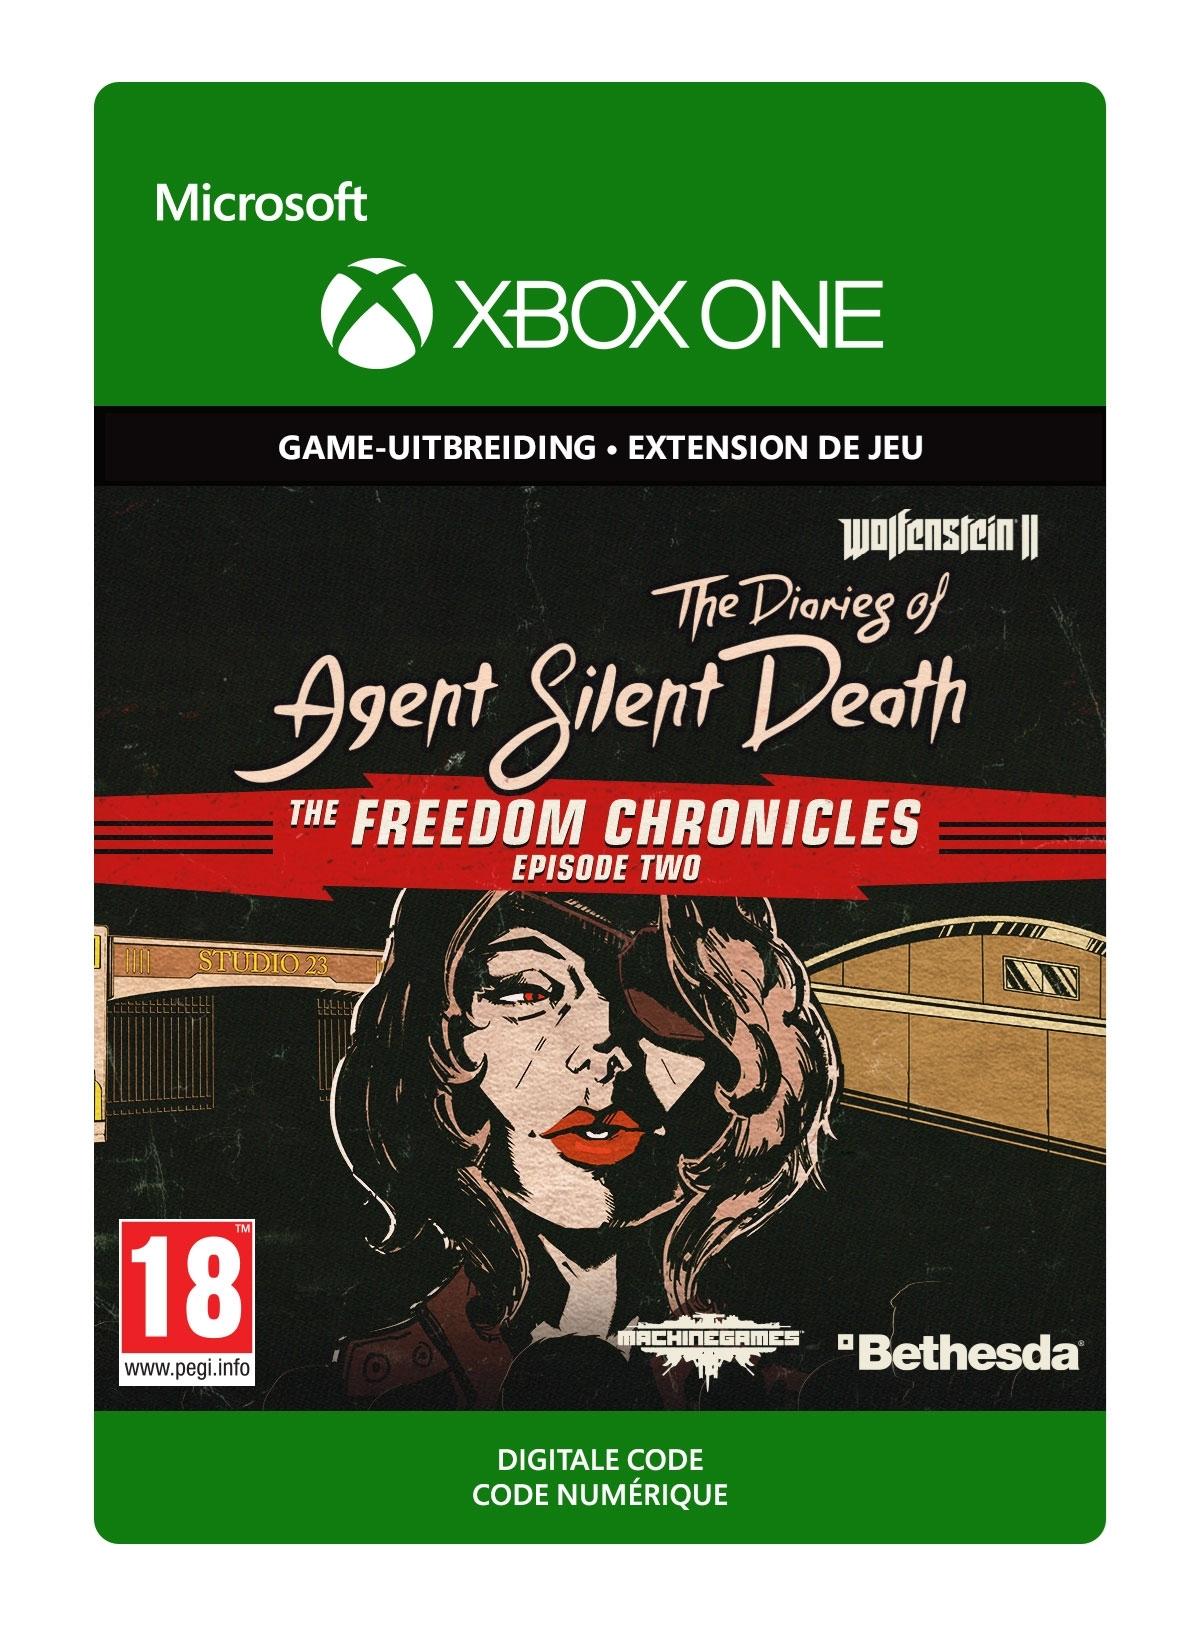 Wolfenstein II: The New Colossus: The Diaries of Agent Silent Death - Xbox One - Add-on | 7D4-00266 (591f7c56-e377-47c9-b45b-9da086f44052)